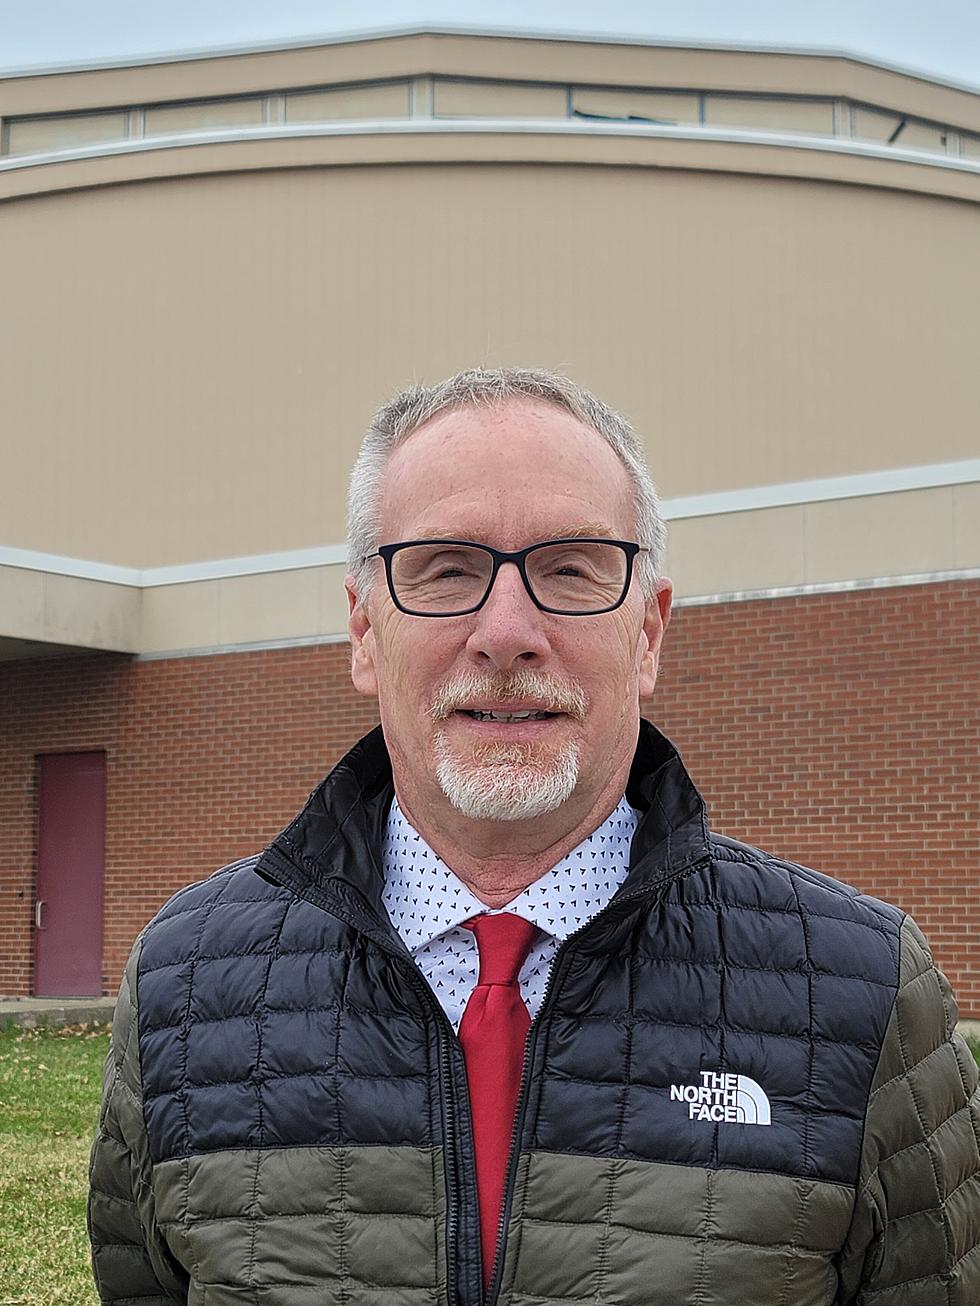 Bangor's Superintendent Announces Retirement This Spring